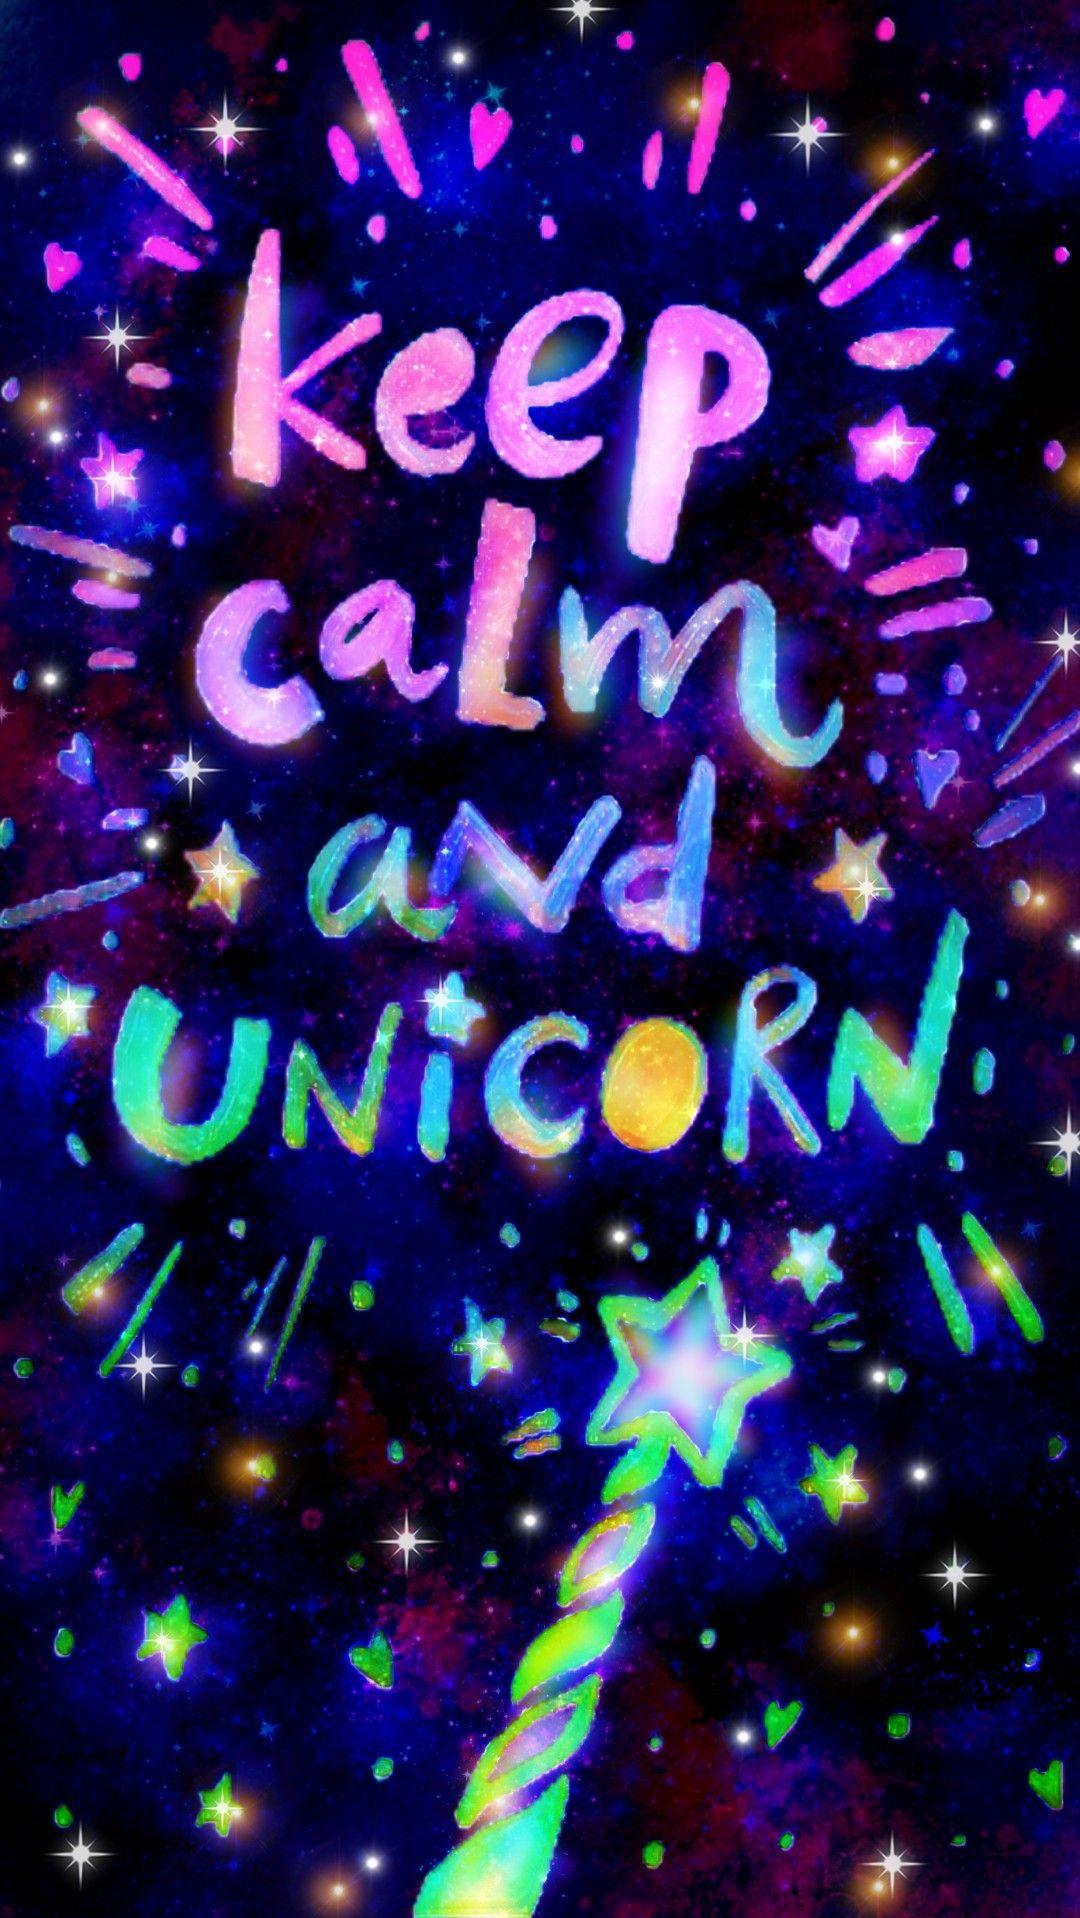 Keep Calm Unicorn Galaxy, made by me #unicorn #fantasy